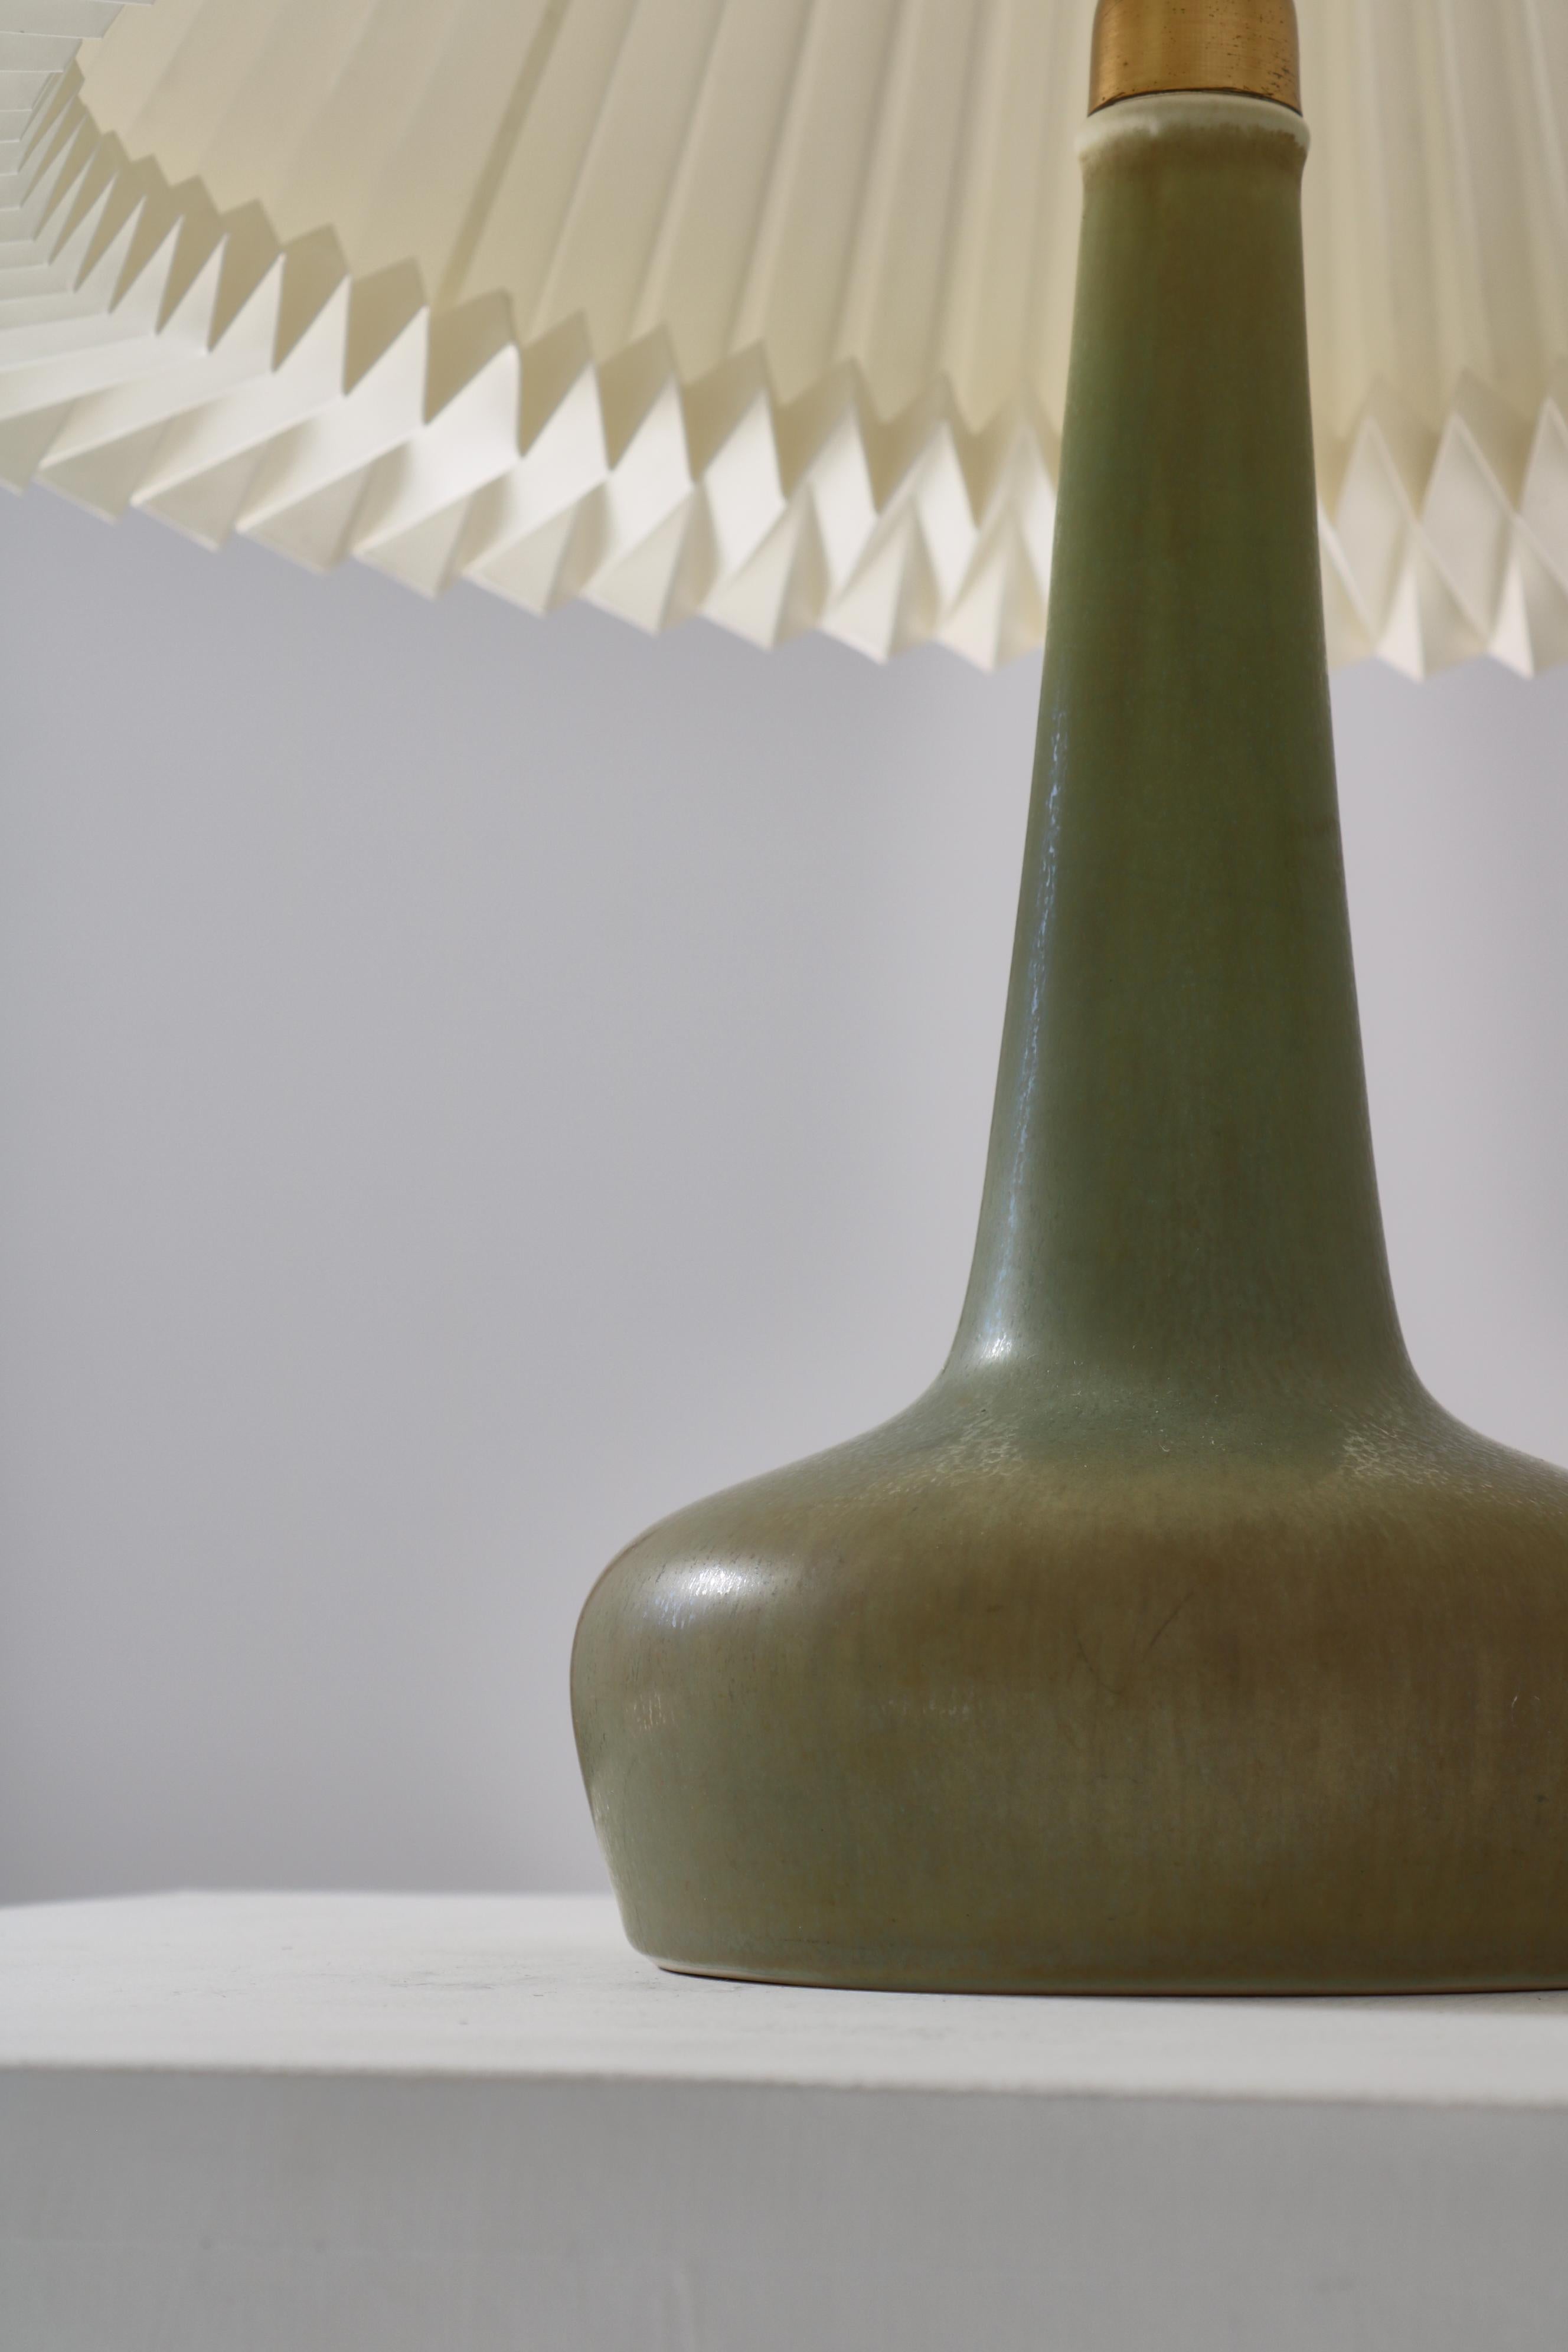 Le Klint & Palshus Stoneware Table Lamp Denmark by Esben Klint, 1970s For Sale 1